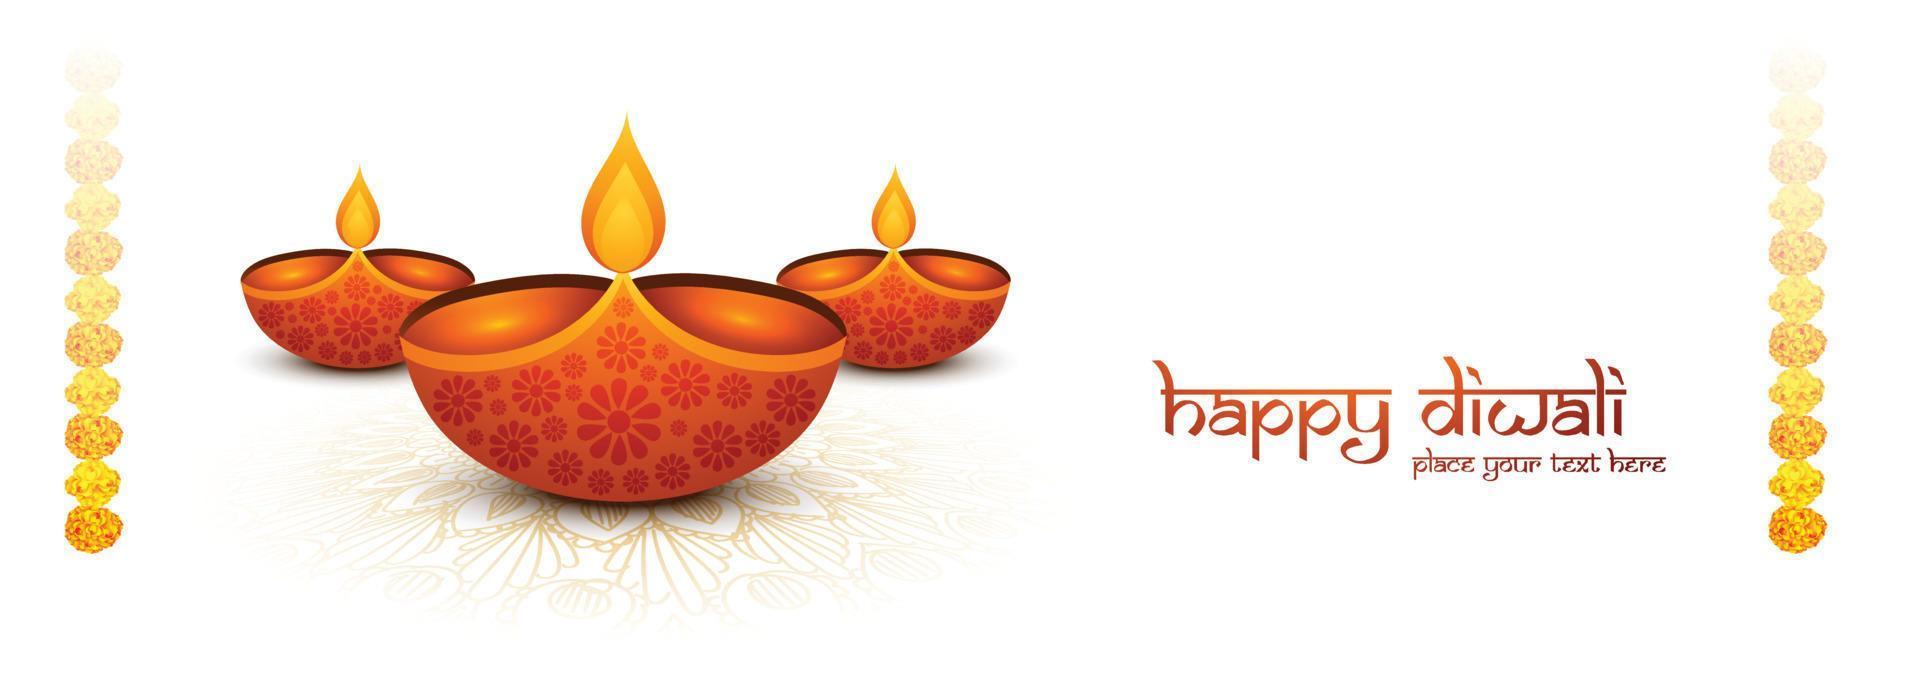 Happy diwali wishes banner with decorative mandalas celebration background vector